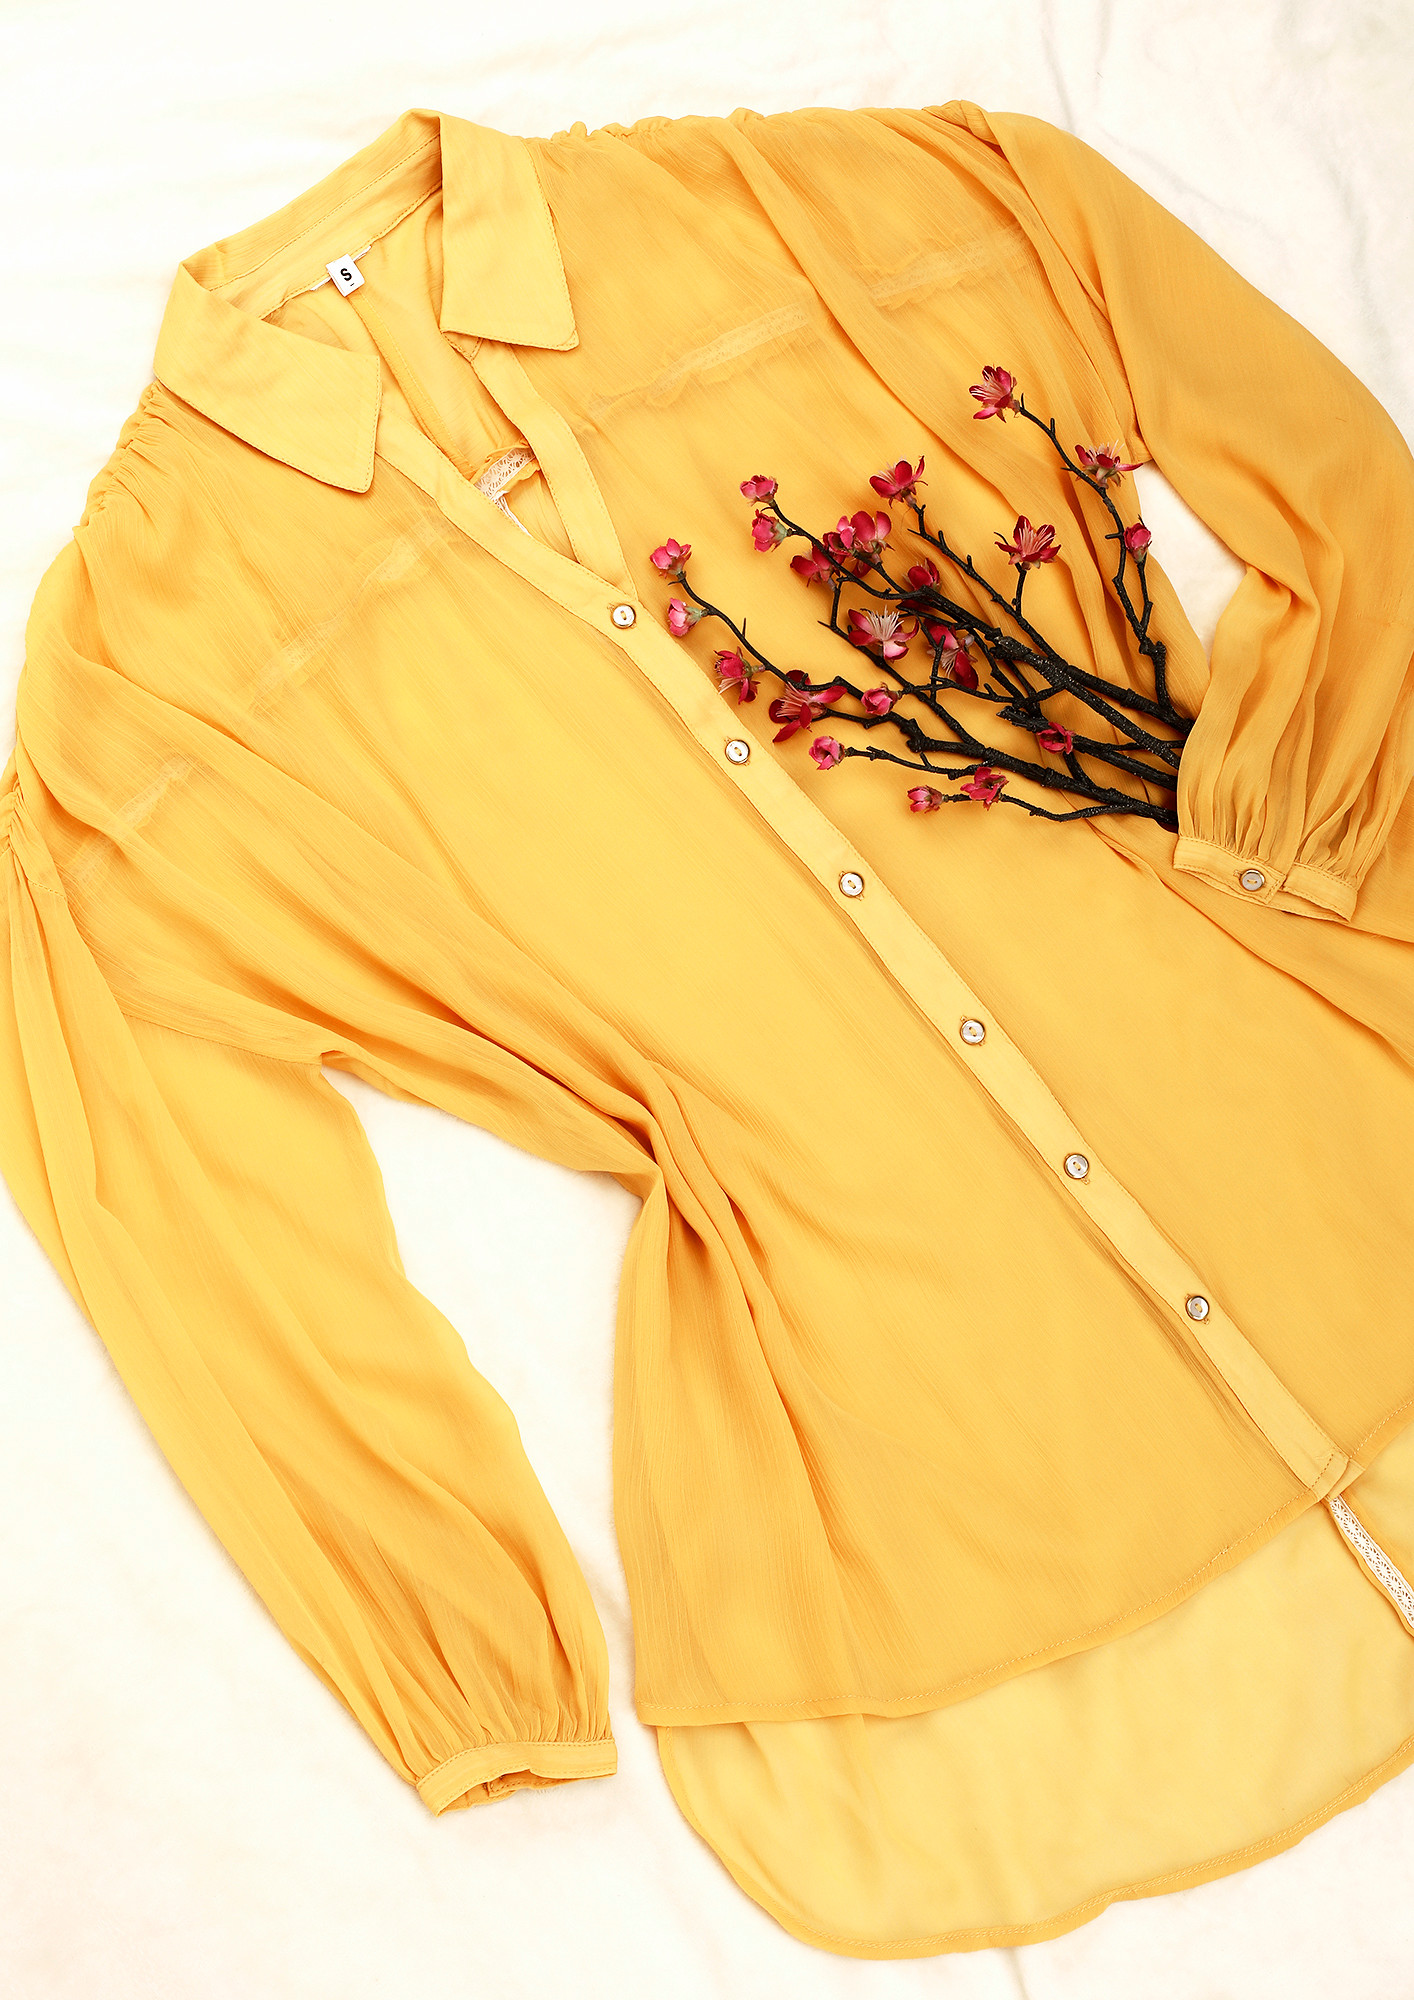 SWEET-YELLOW COLLARED TRANSPARENT SHIRT DRESS